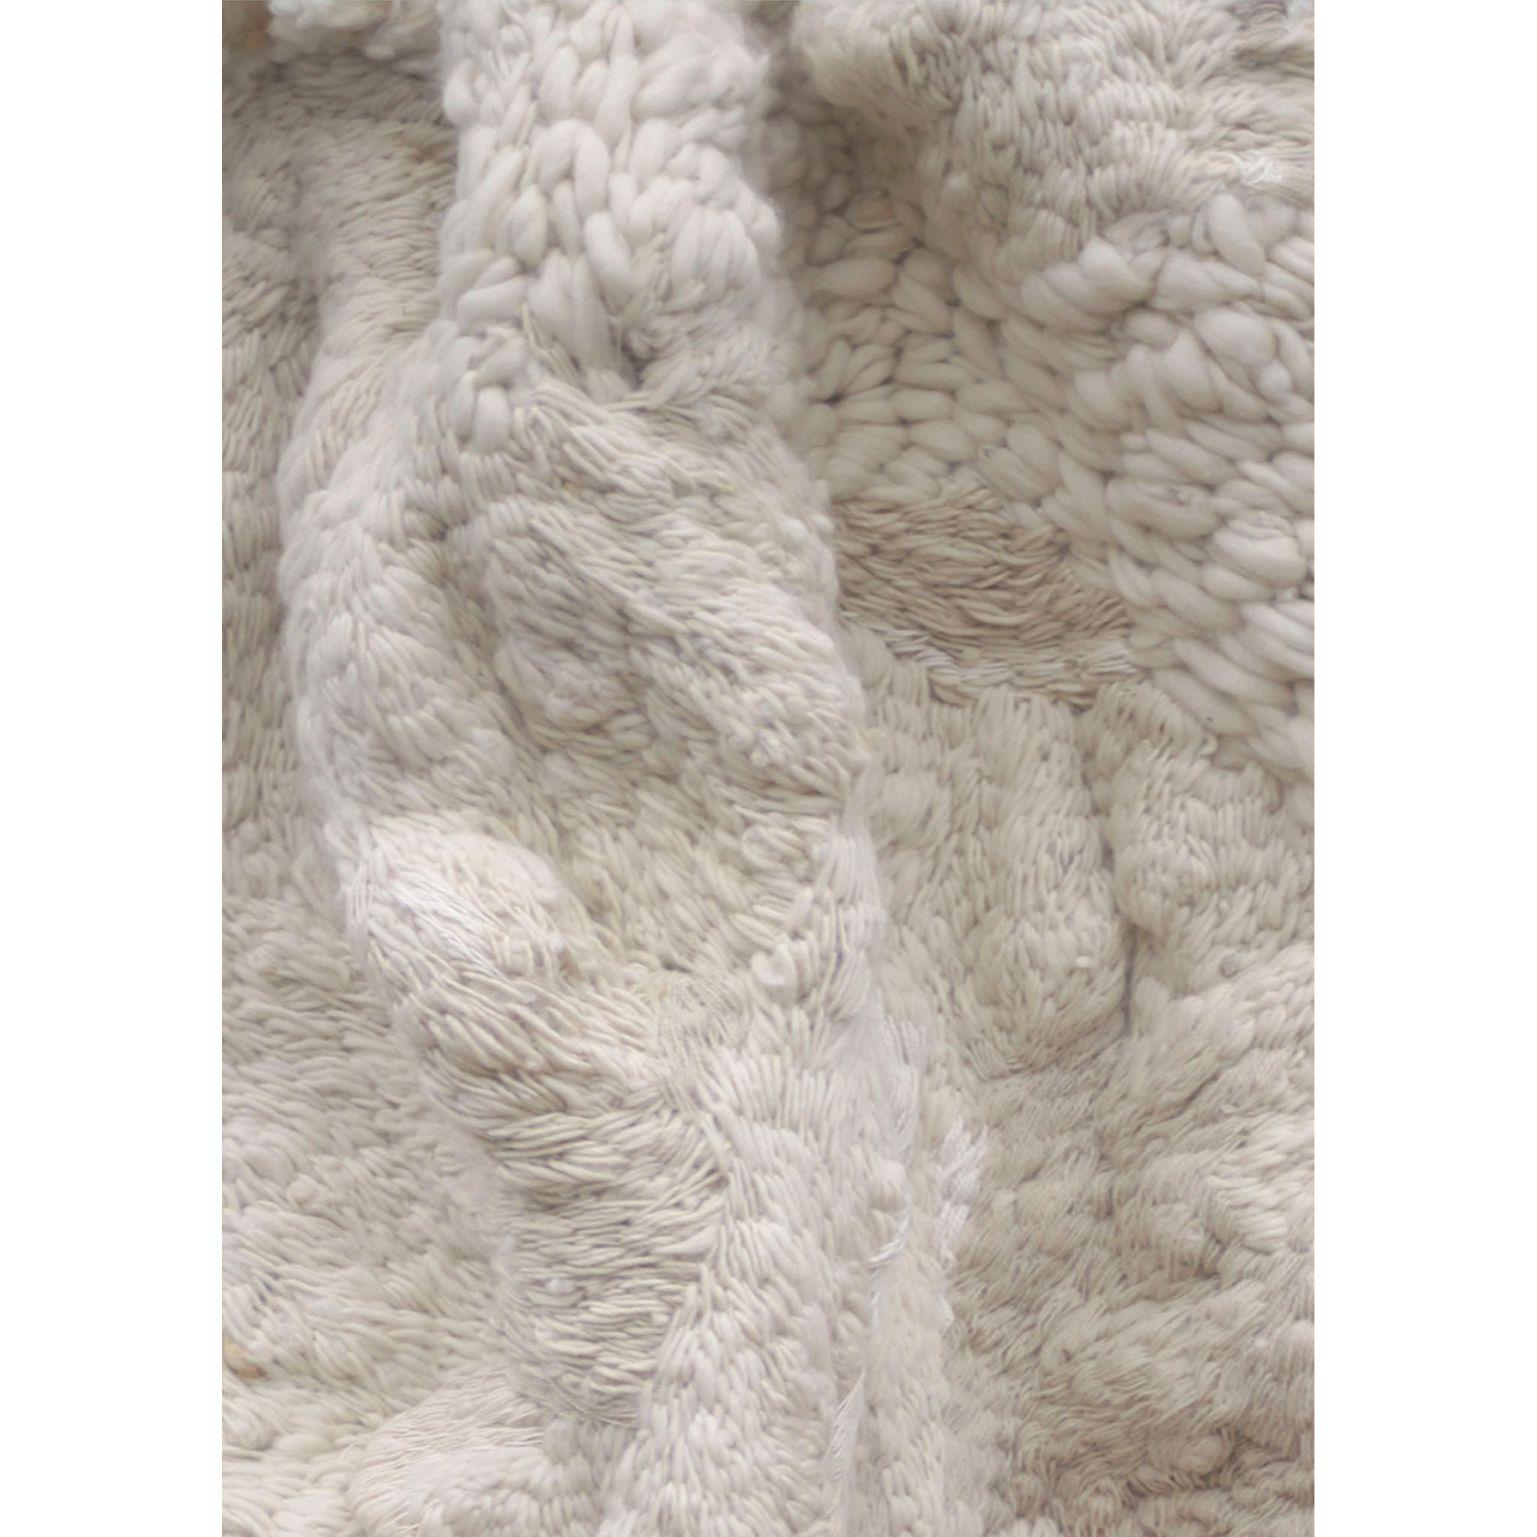 Blanco Tapestry / Rug by Vera Somlo
Unique piece
Dimensions: 170 x 210 cm
Materials: Organic Wool, Ilama Fiber

Handspun and embroidered with pure organic wool and llama fiber.

Vera was born in Bariloche Argentina in 1979. In 1997 Vera